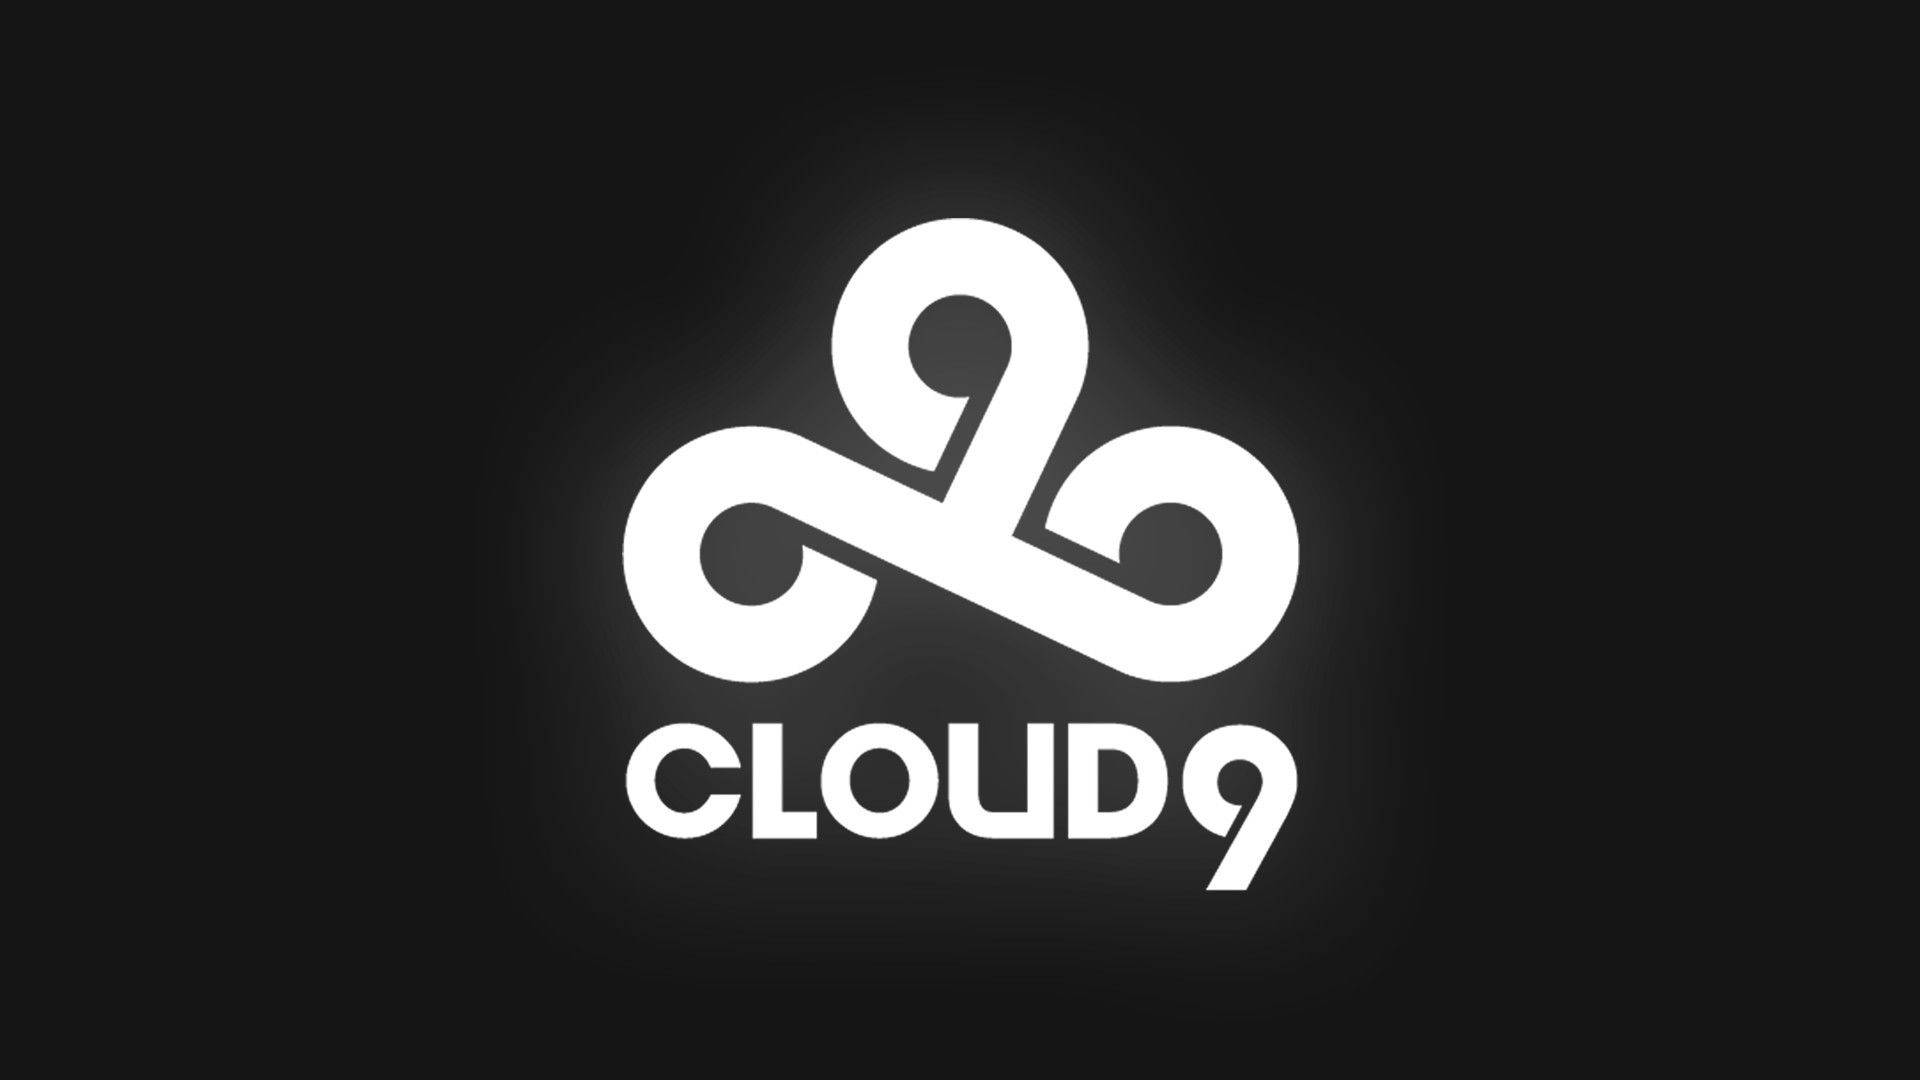 Cloud9 Background Photos